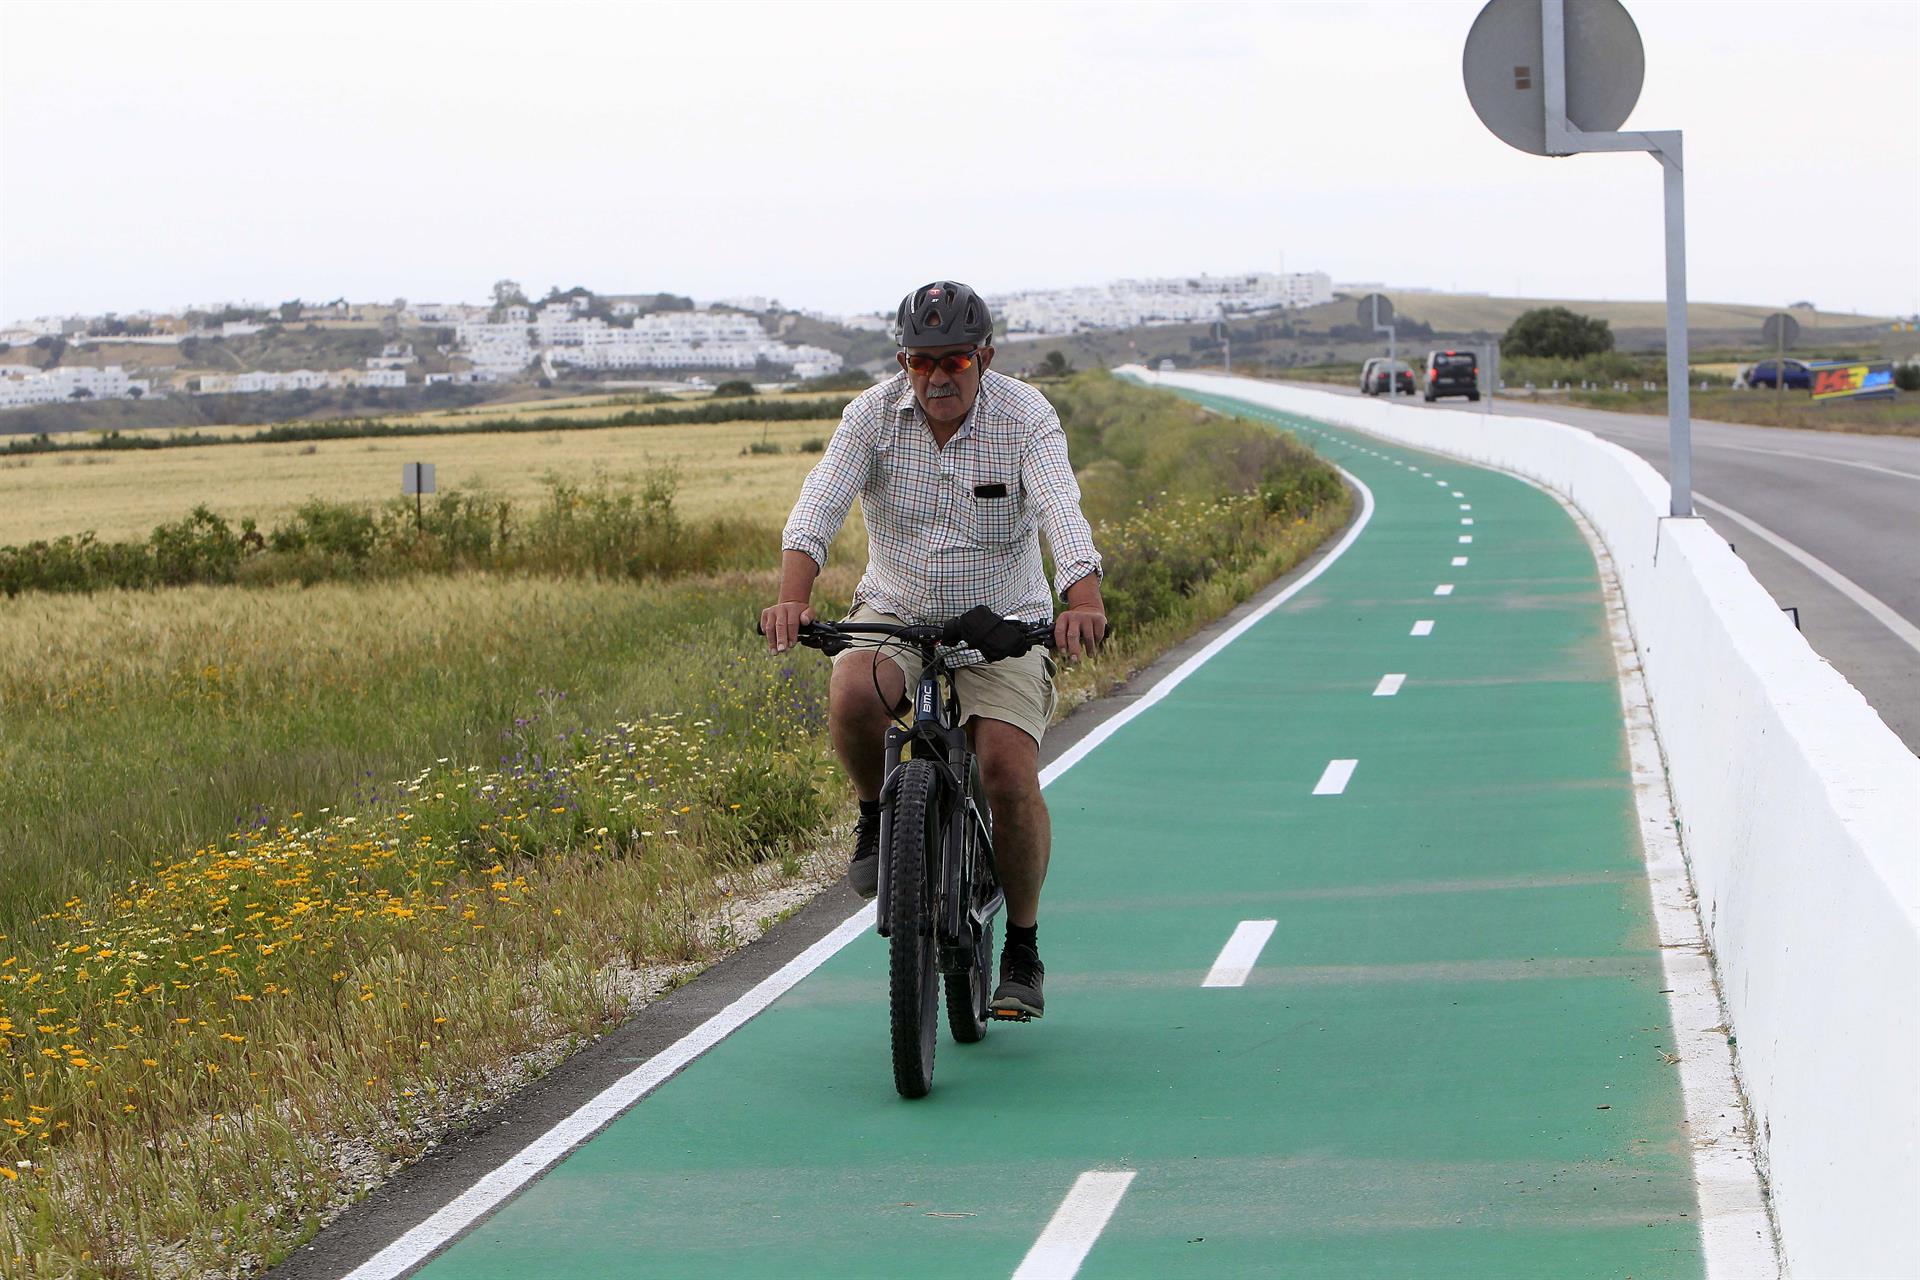 Un carril bici conectará ambas localidades de la provincia de Cádiz.